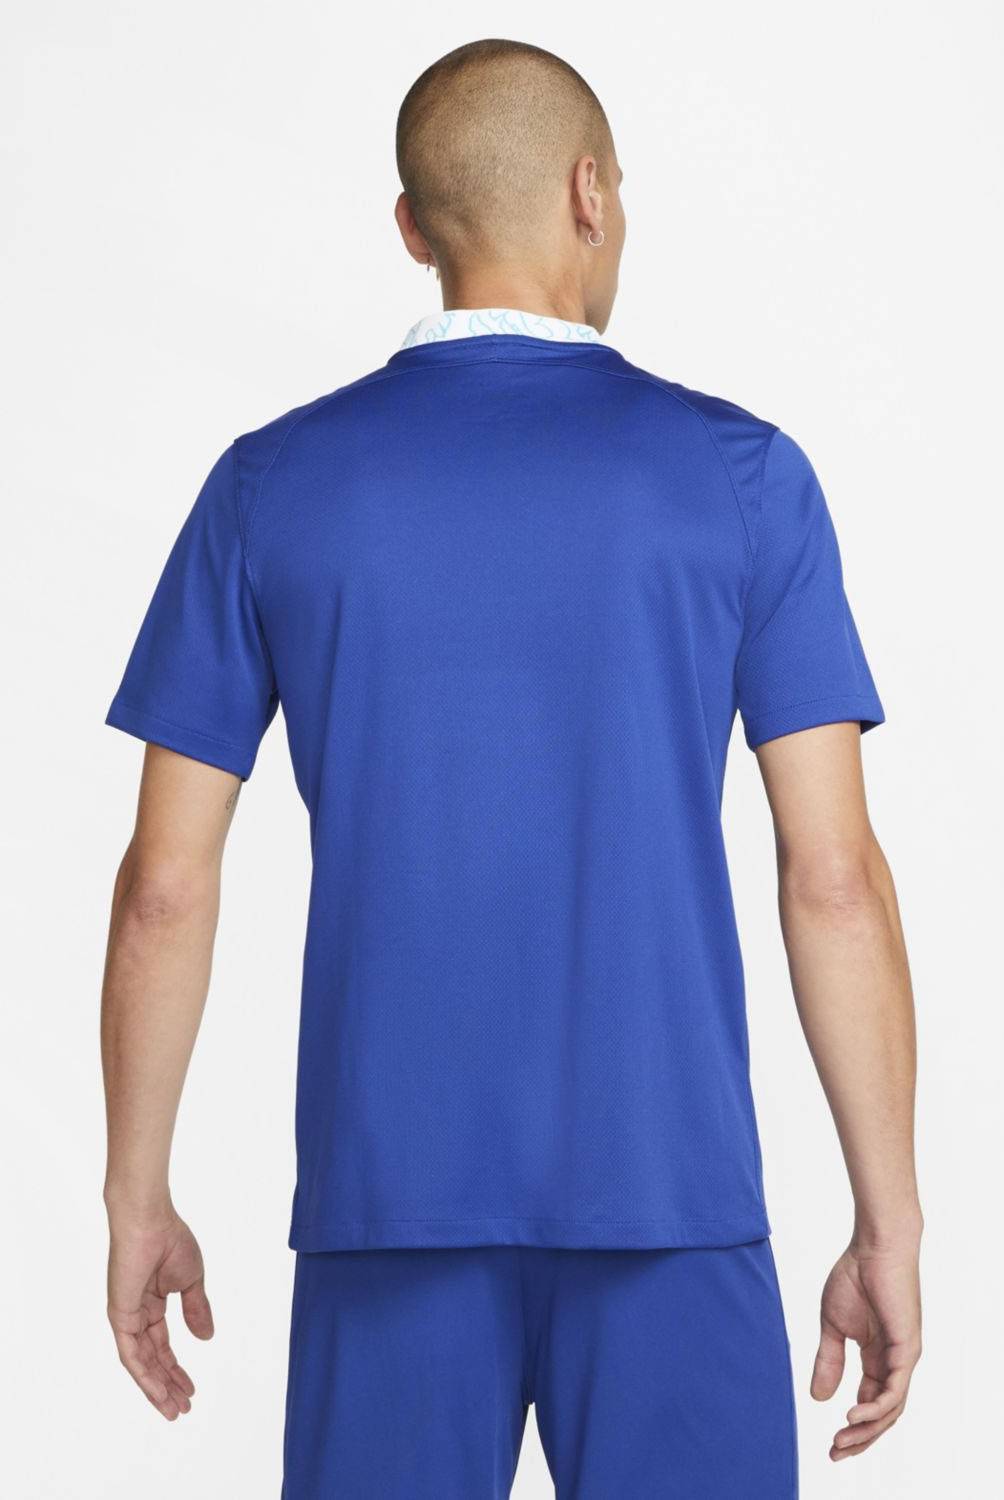 NIKE - Camiseta De Fútbol Chelsea Local Hombre Nike